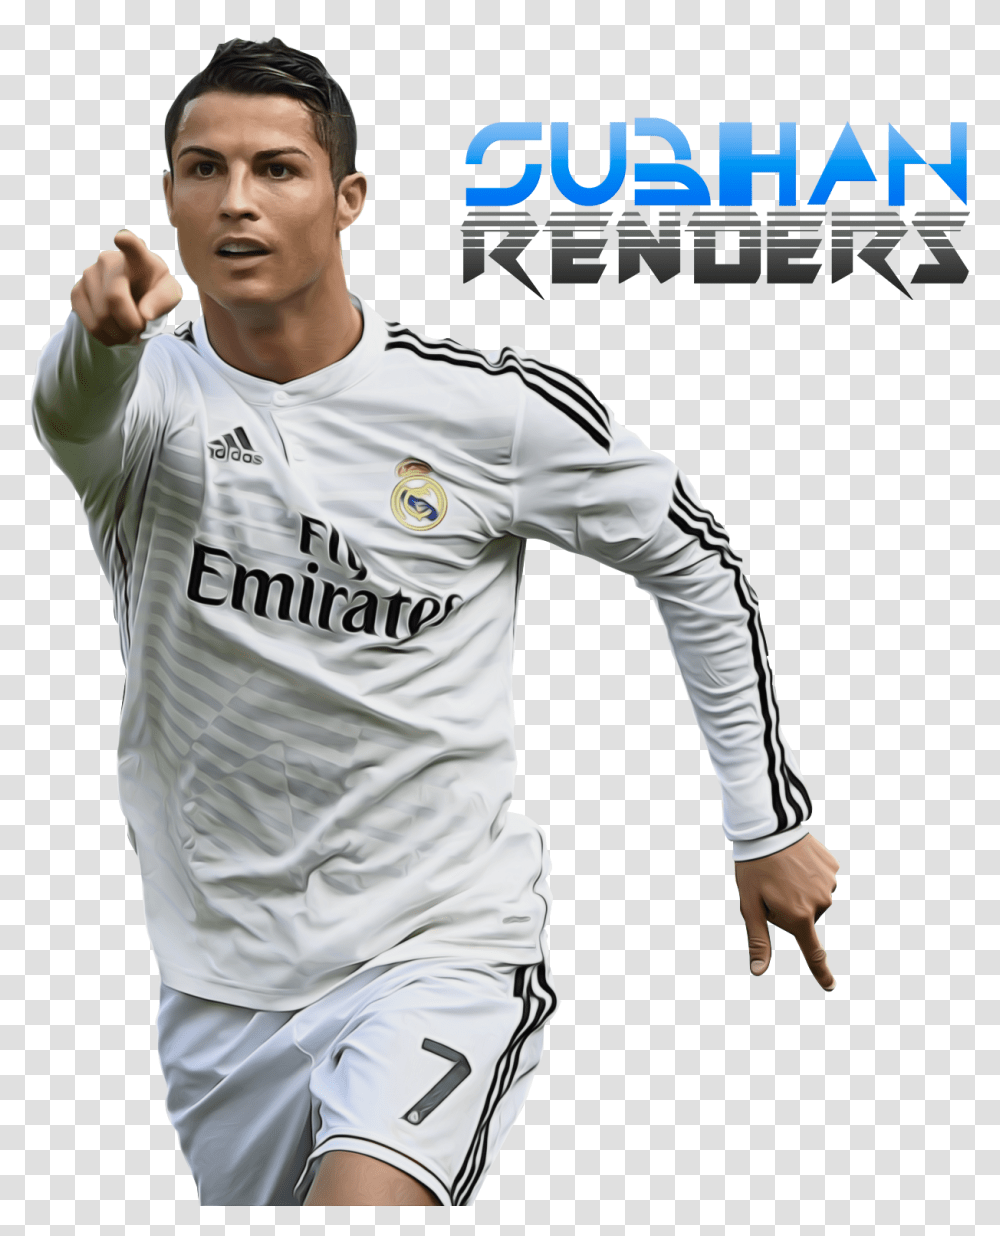 Download Cristiano Ronaldo Free Download For Designing Cristiano Ronaldo Hd, Apparel, Sleeve, Shirt Transparent Png